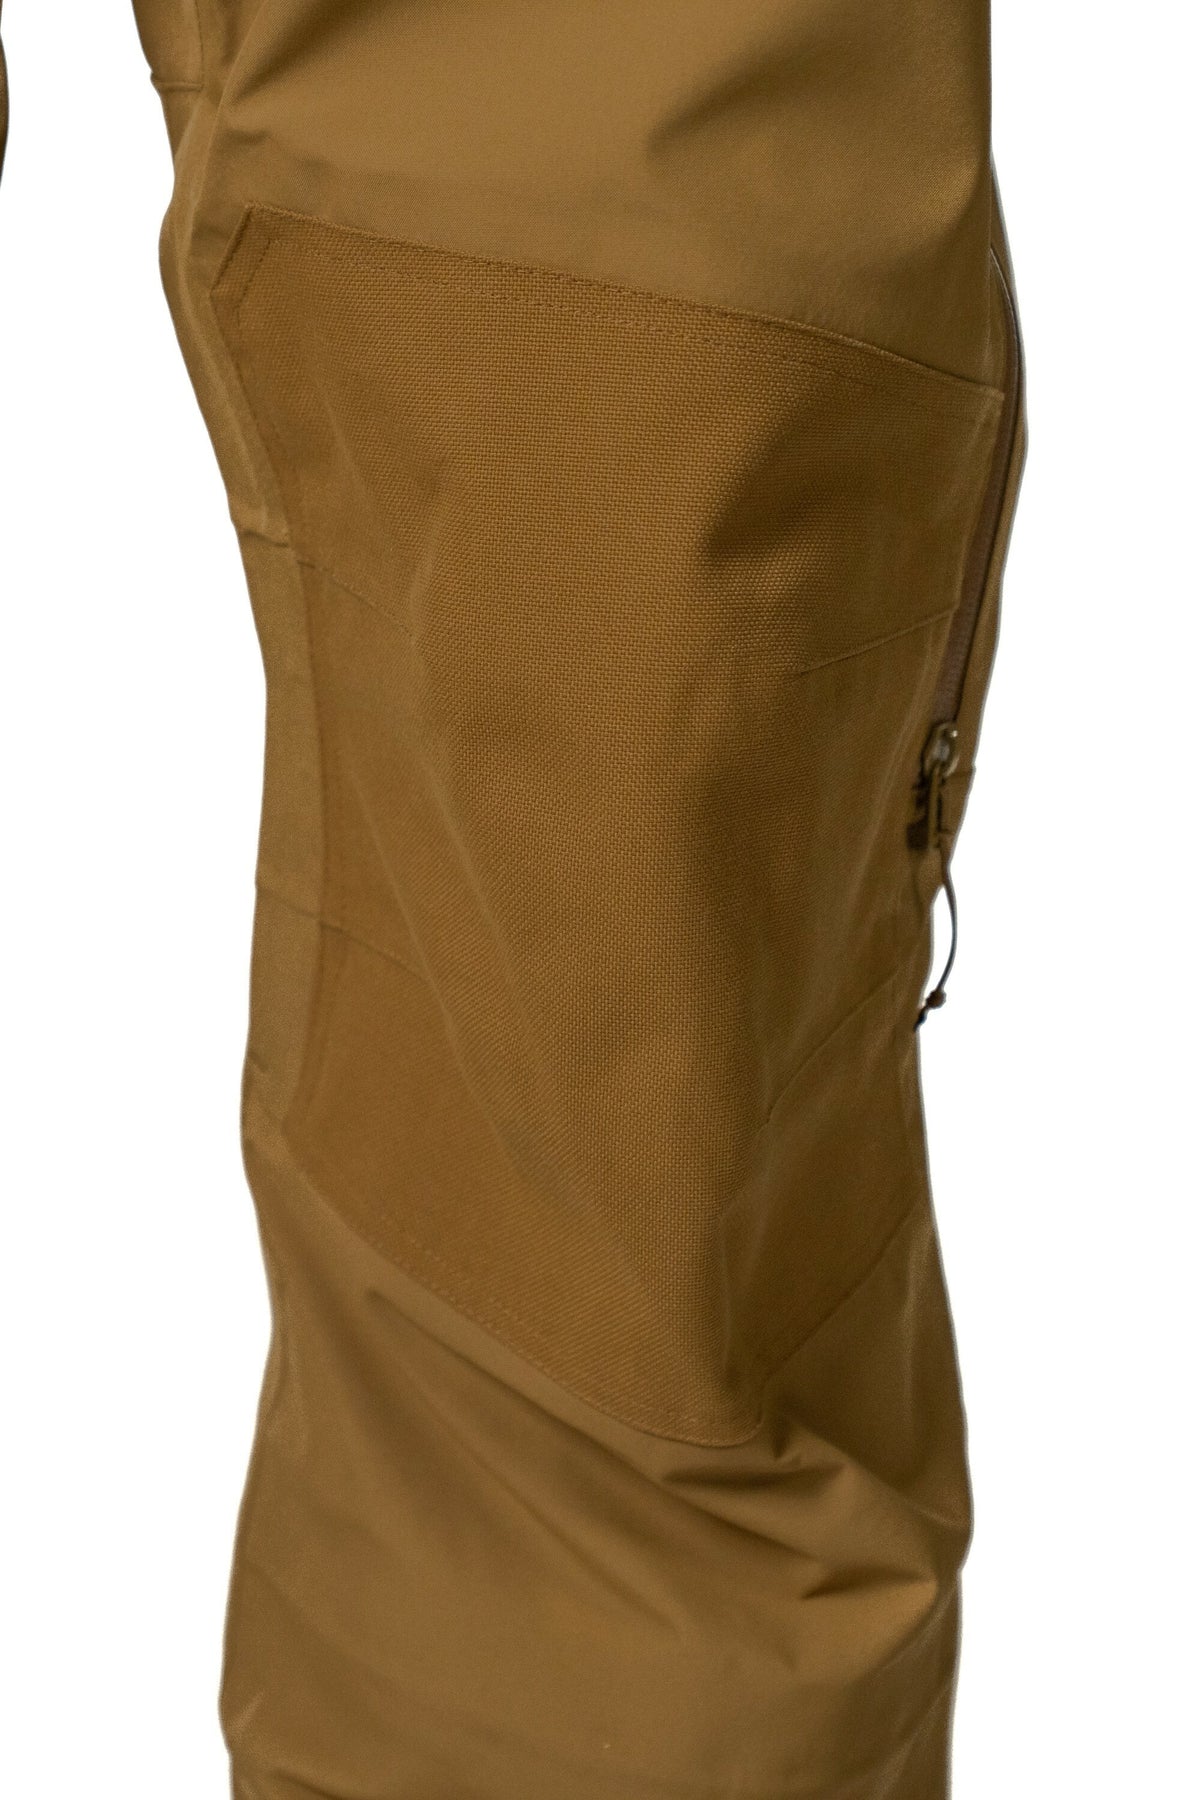 Swazi Lightweight Waterproof Overtrousers - Waterproof Hunting Trousers -  Farlows